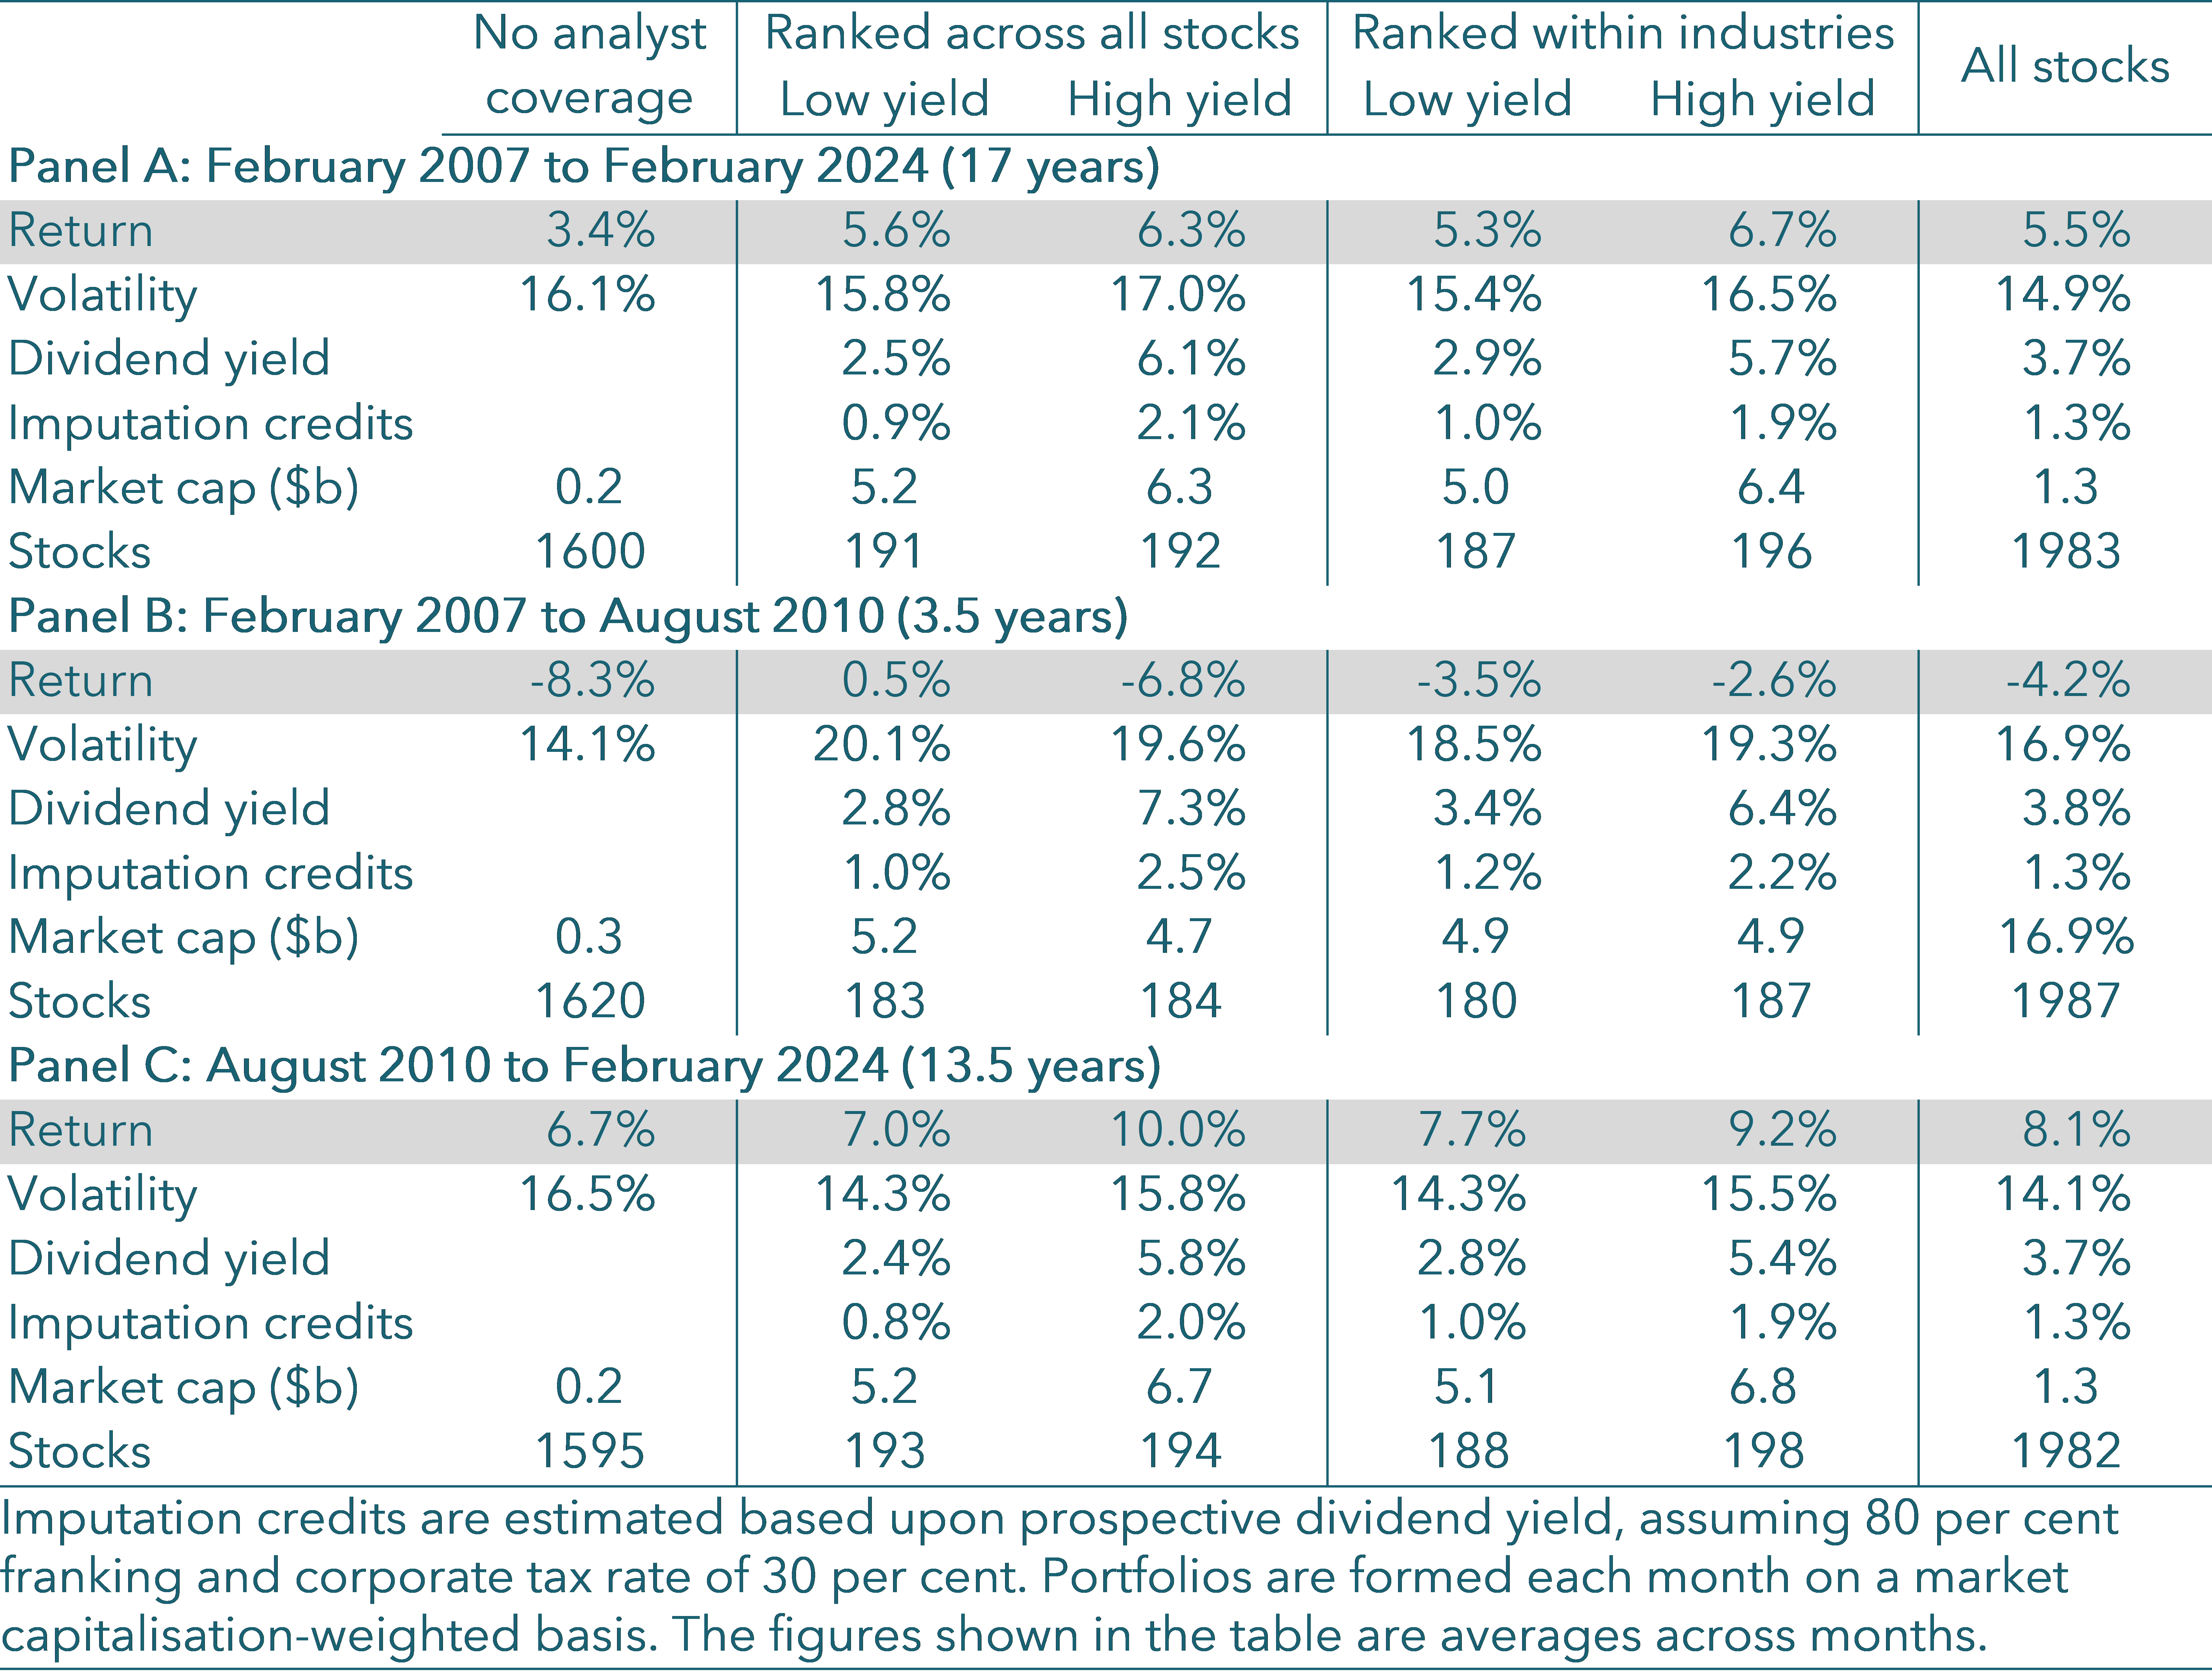 Table 1. High versus low yield portfolio characteristics